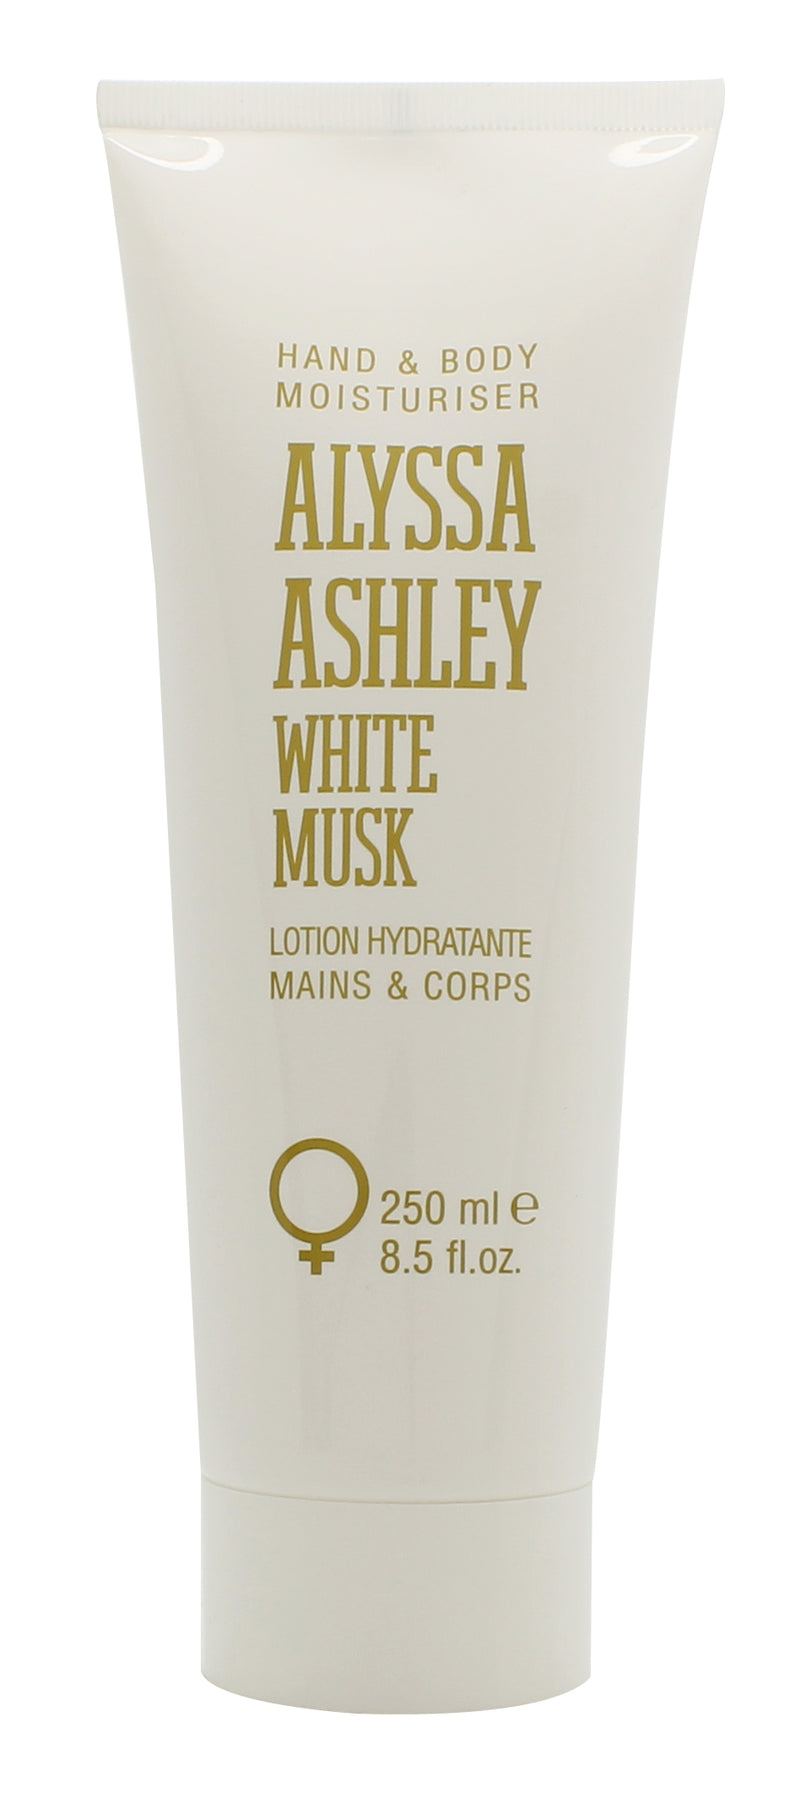 Alyssa Ashley White Musk Hand and Body Moisturiser 250ml